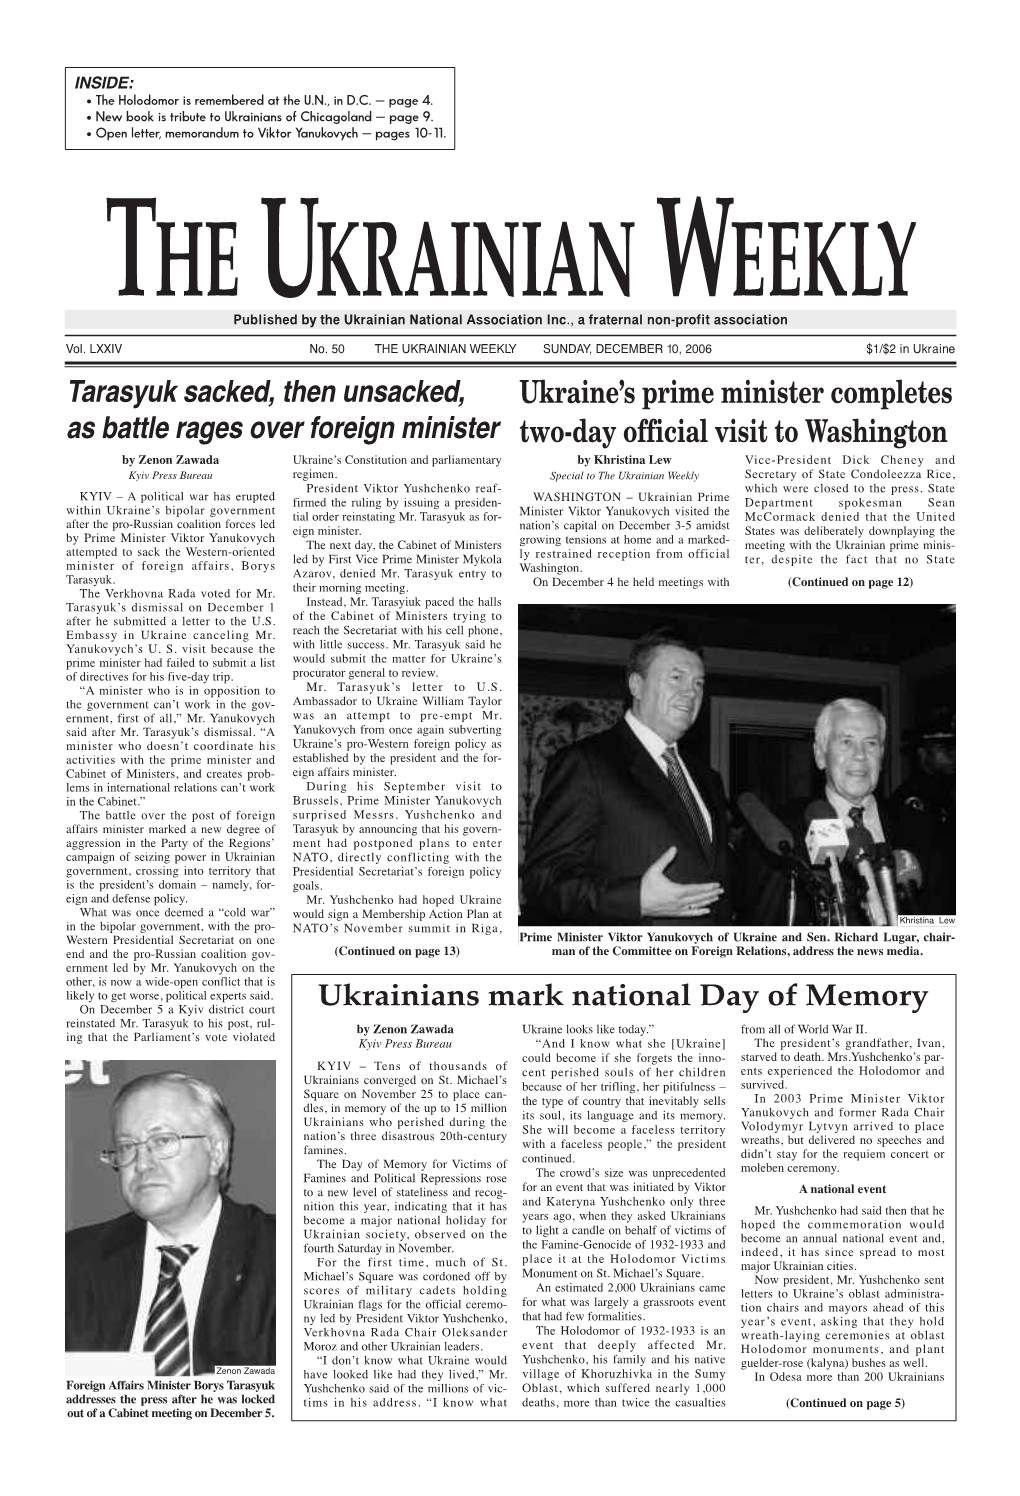 The Ukrainian Weekly 2006, No.50